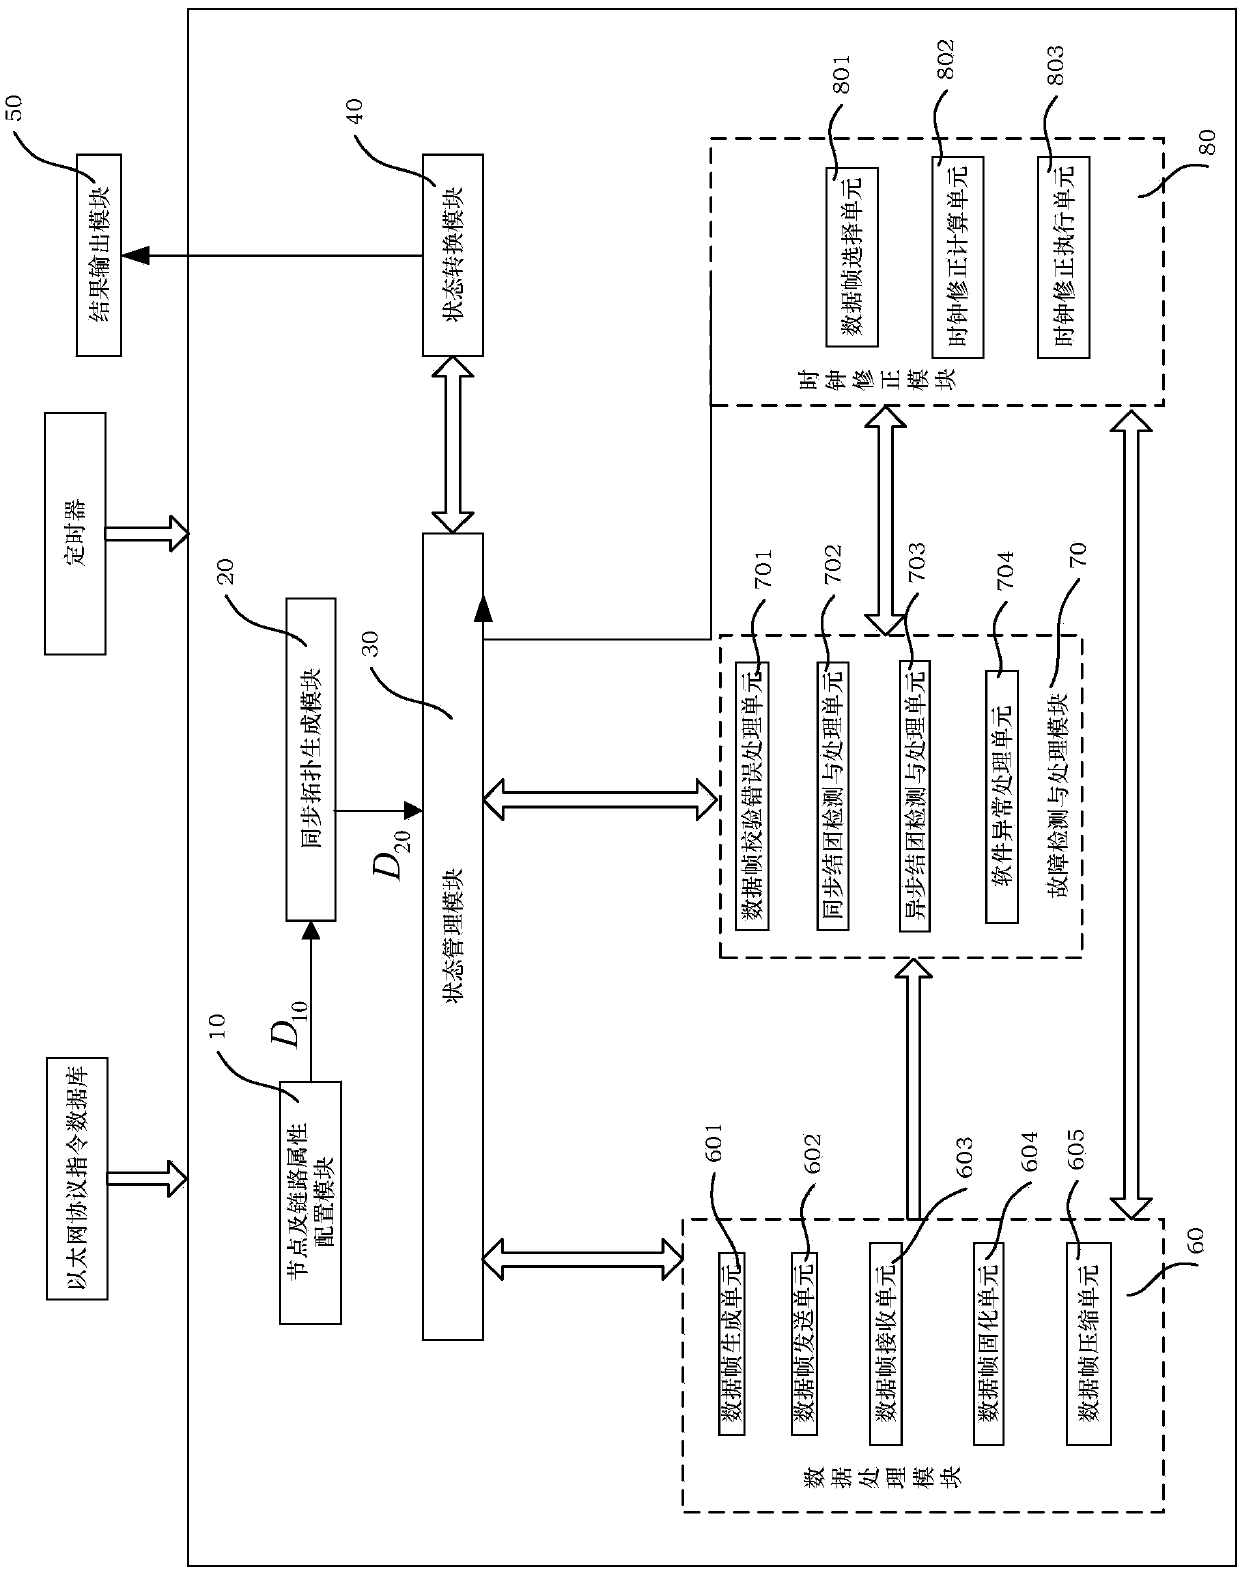 Simulation system of simulating switched Ethernet clock synchronization